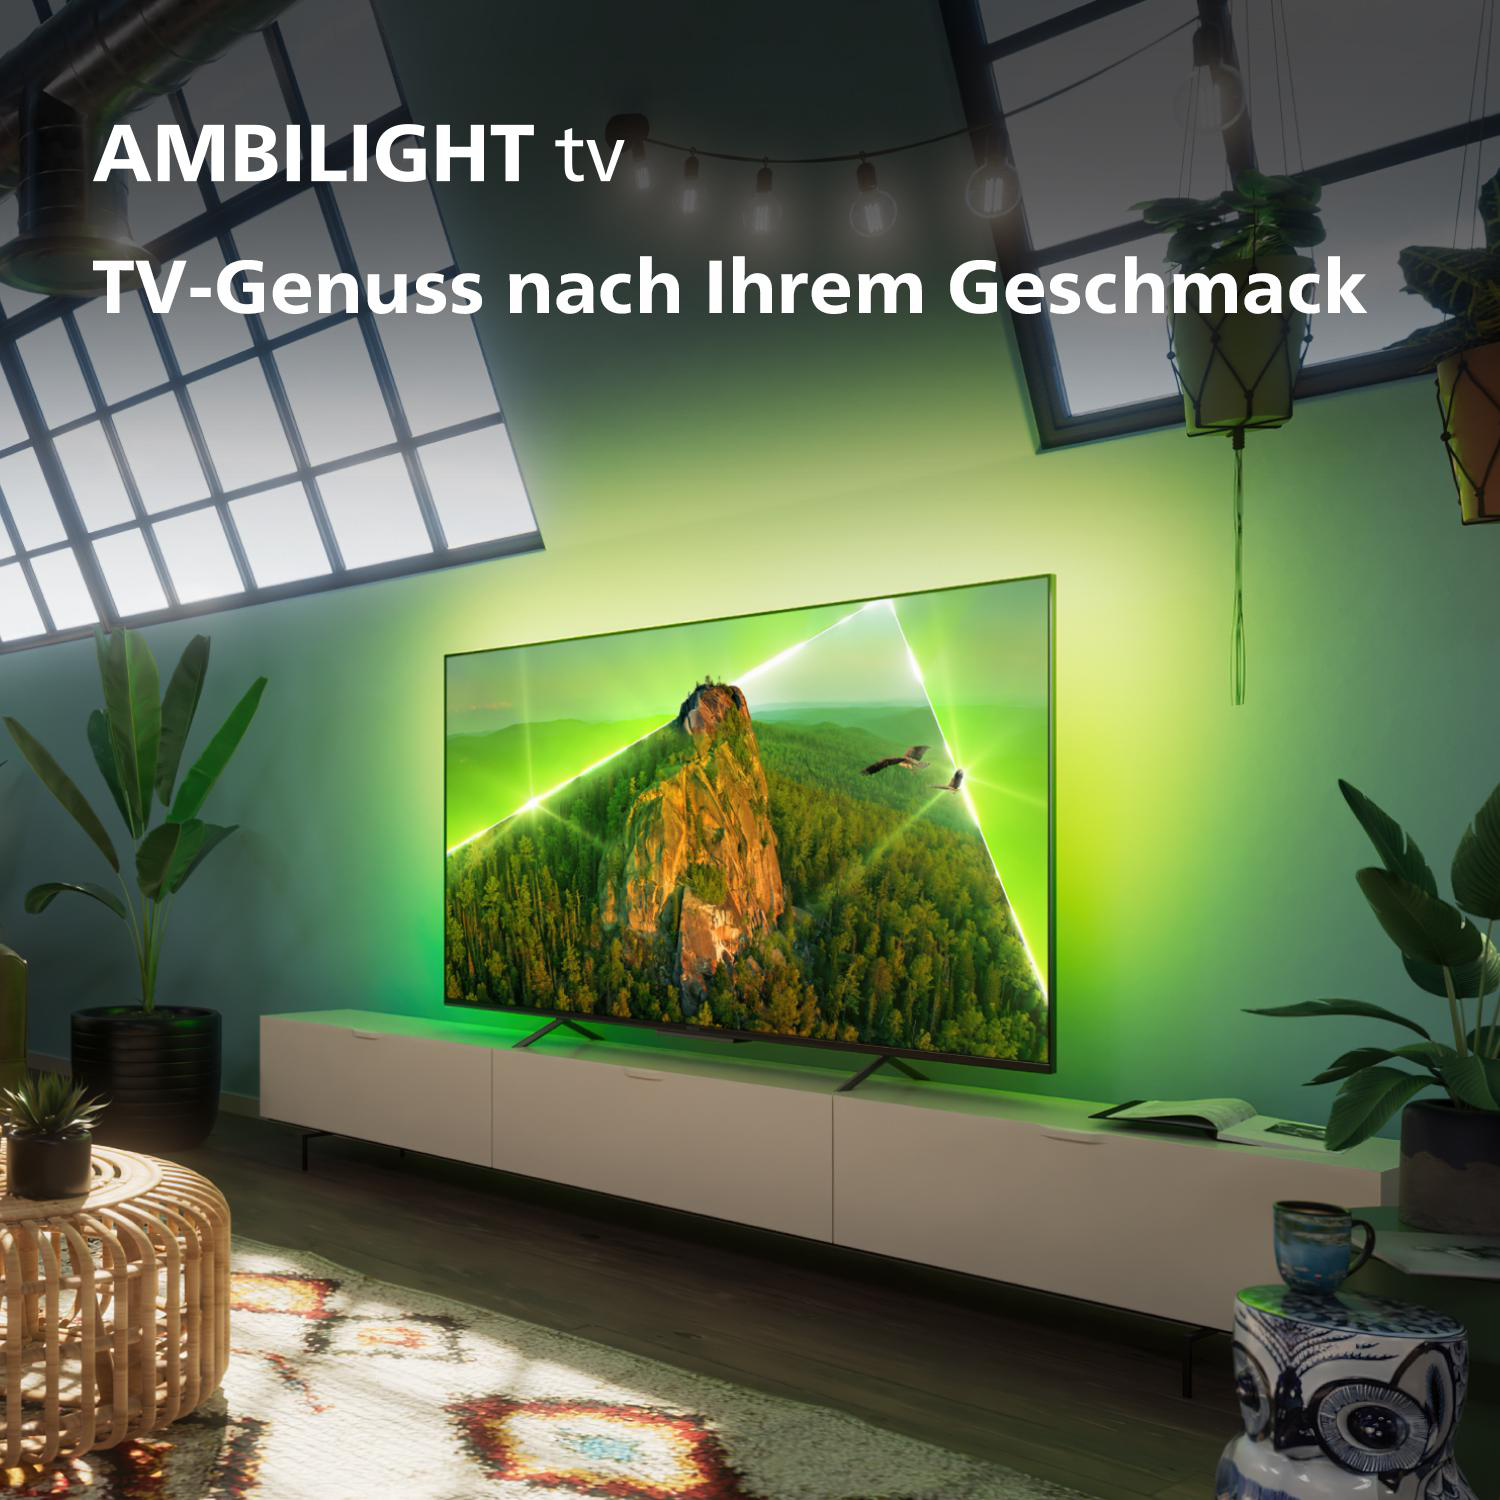 PHILIPS 55PUS8108/12 4K LED Ambilight TV, TV cm, Philips Zoll 4K, UHD Ambilight, 139 TV) SMART Smart 55 (Flat, 